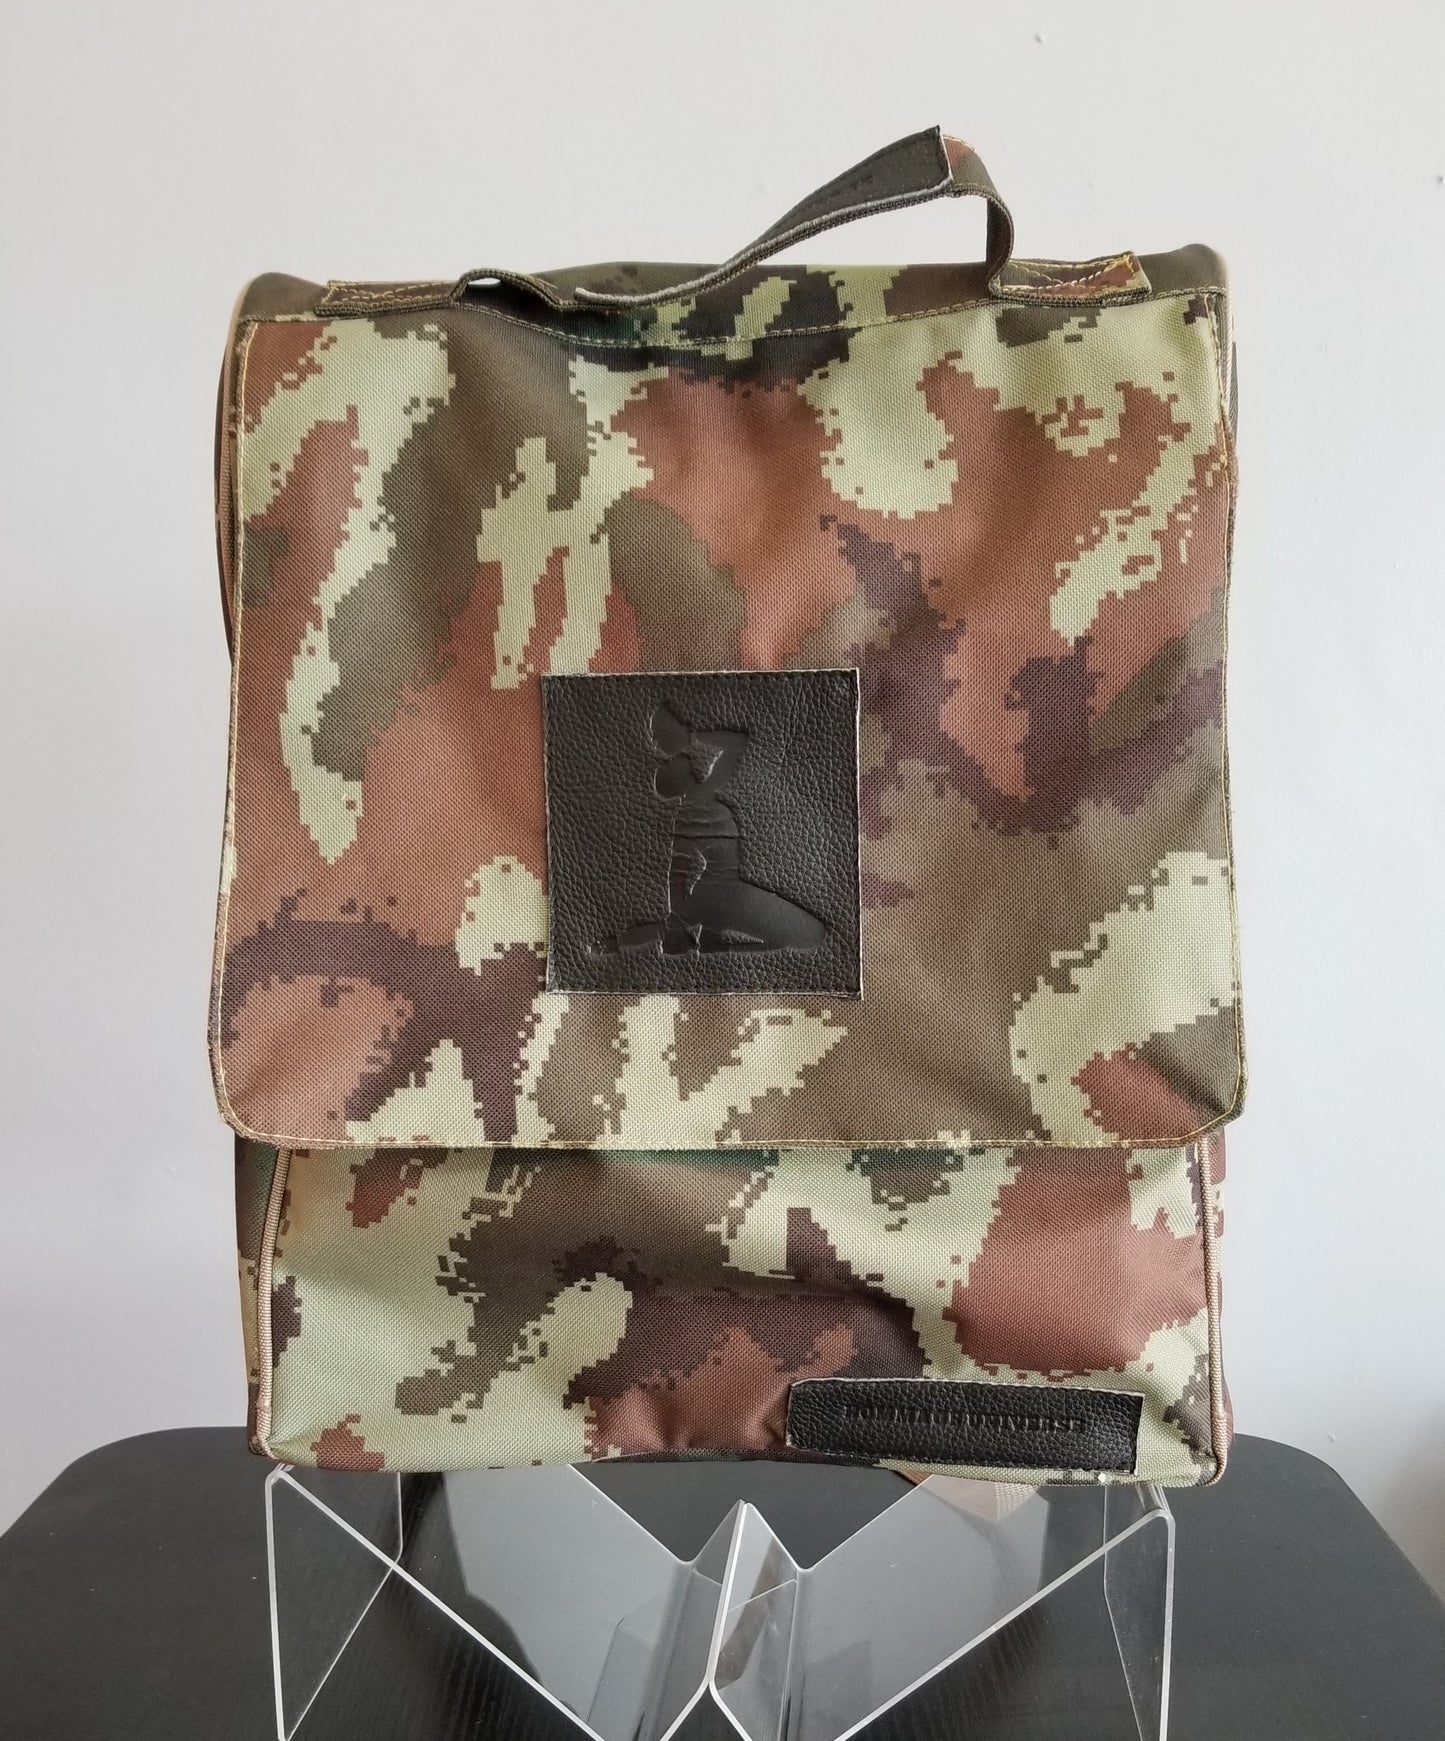 RALFÒ-PRO Green Leather Backpack